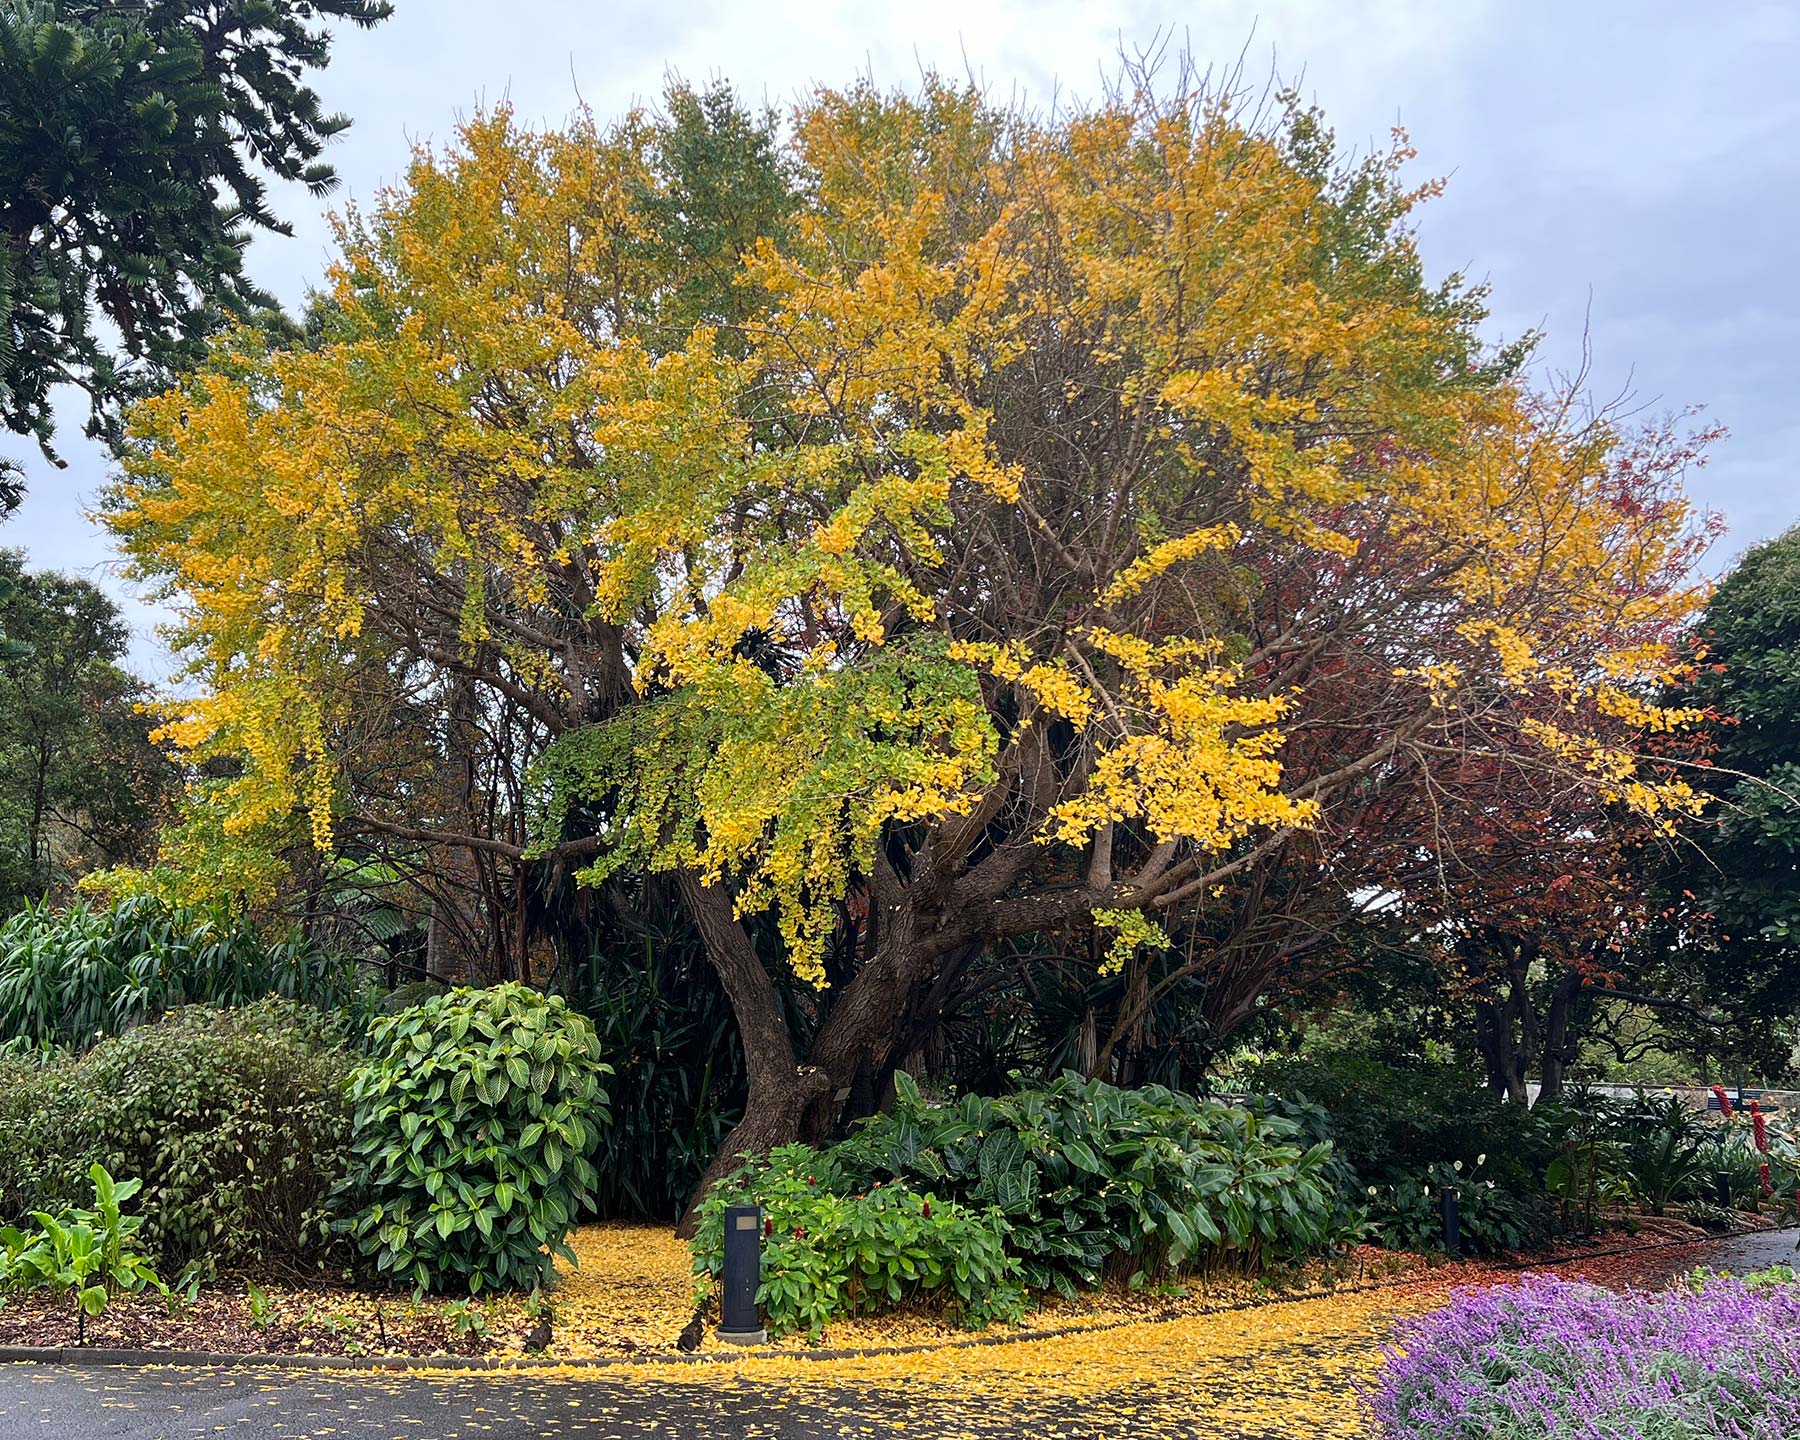 Ginkgo biloba - yellow leaves fall creating a yellow carpet